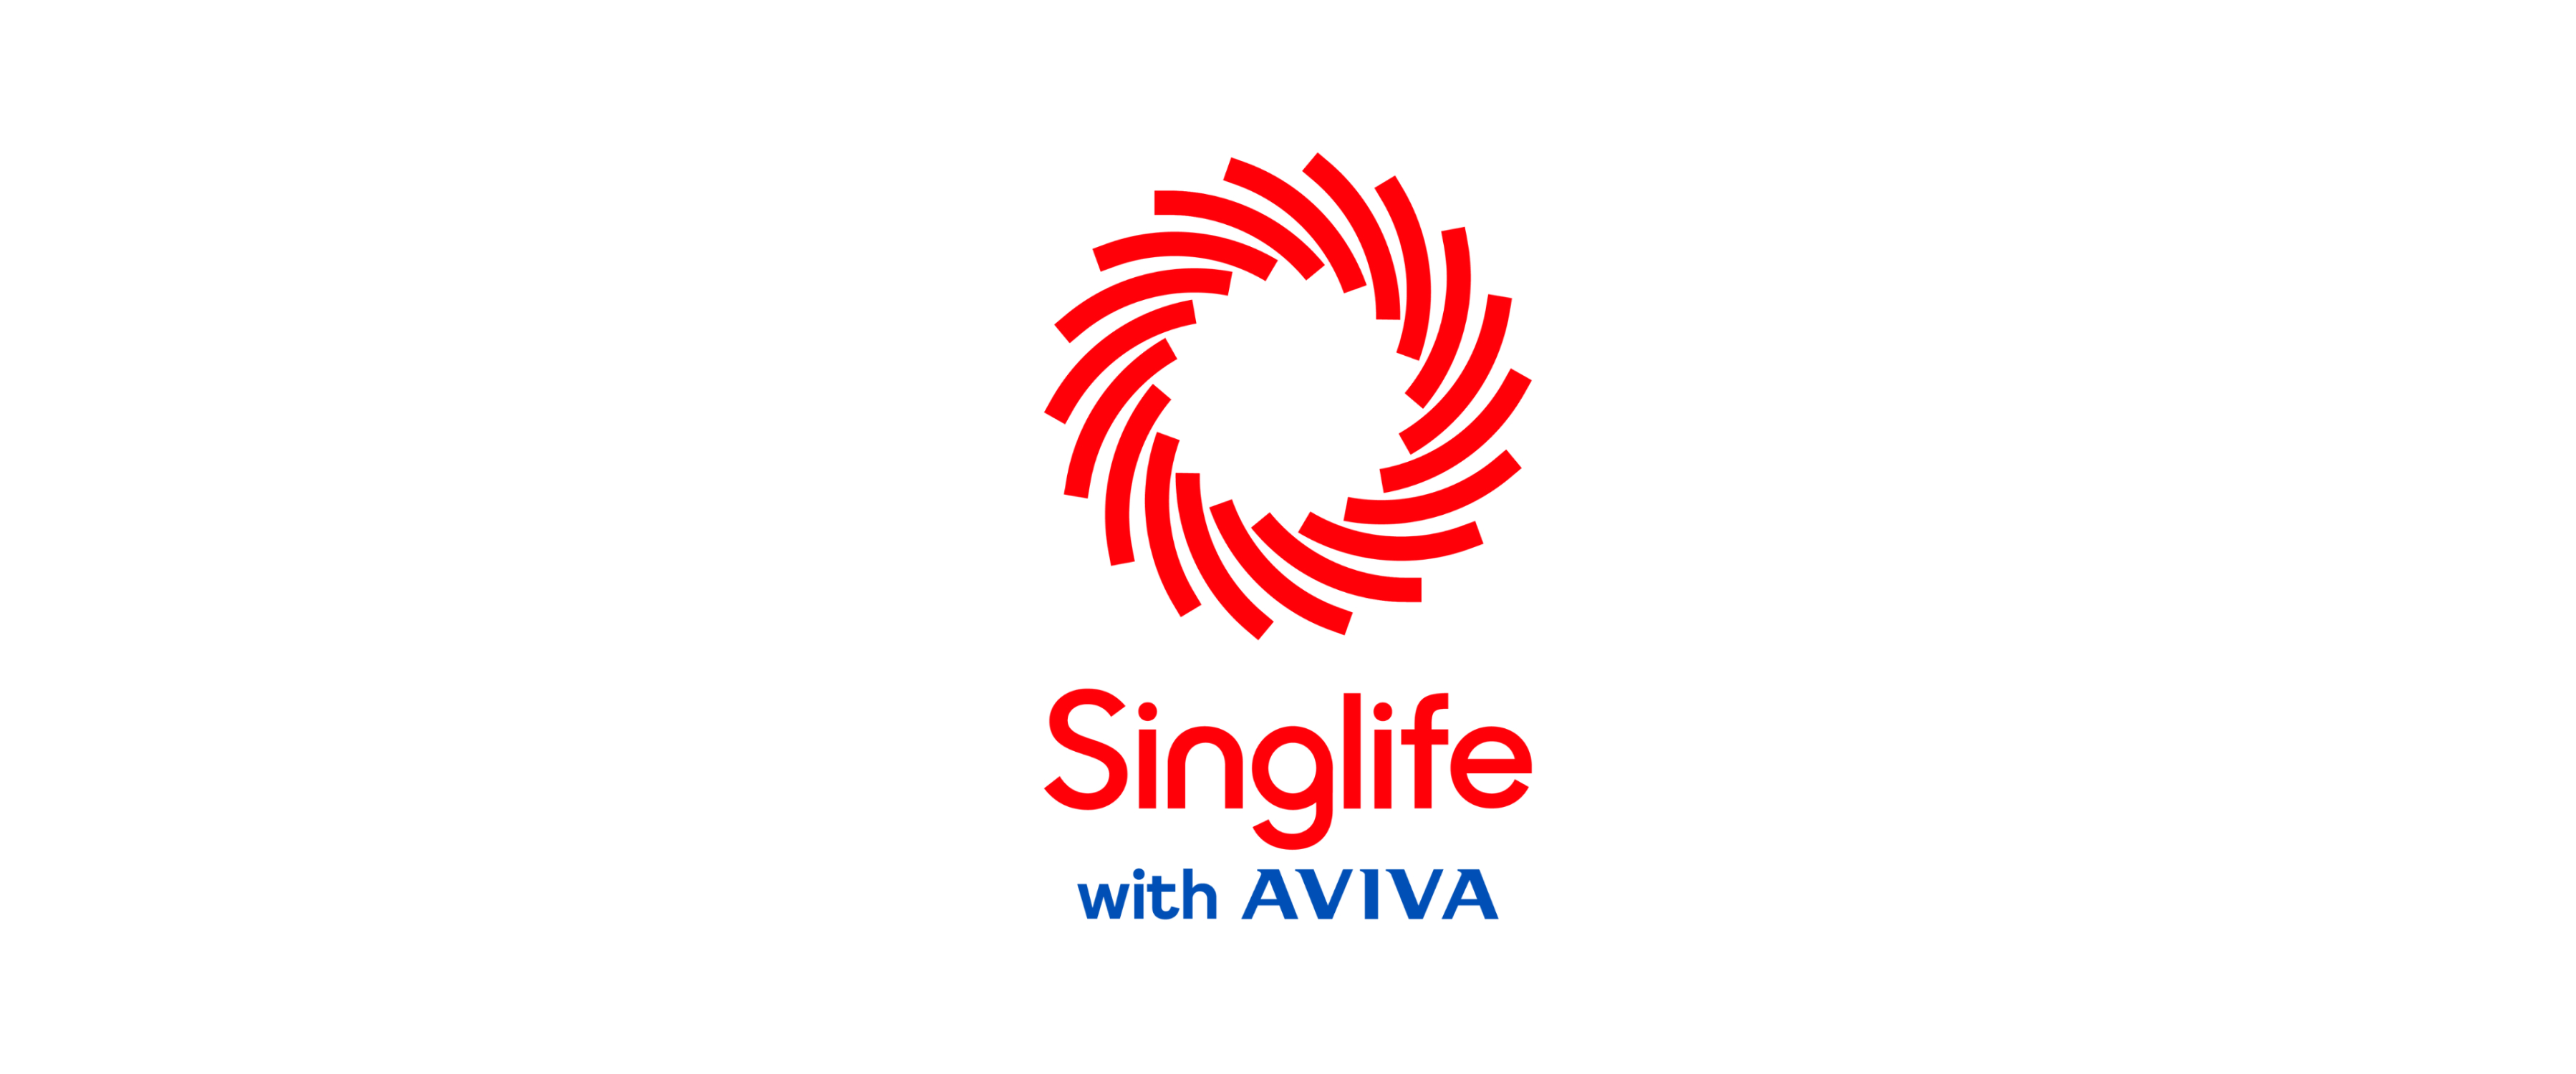 Image of Singlife logo